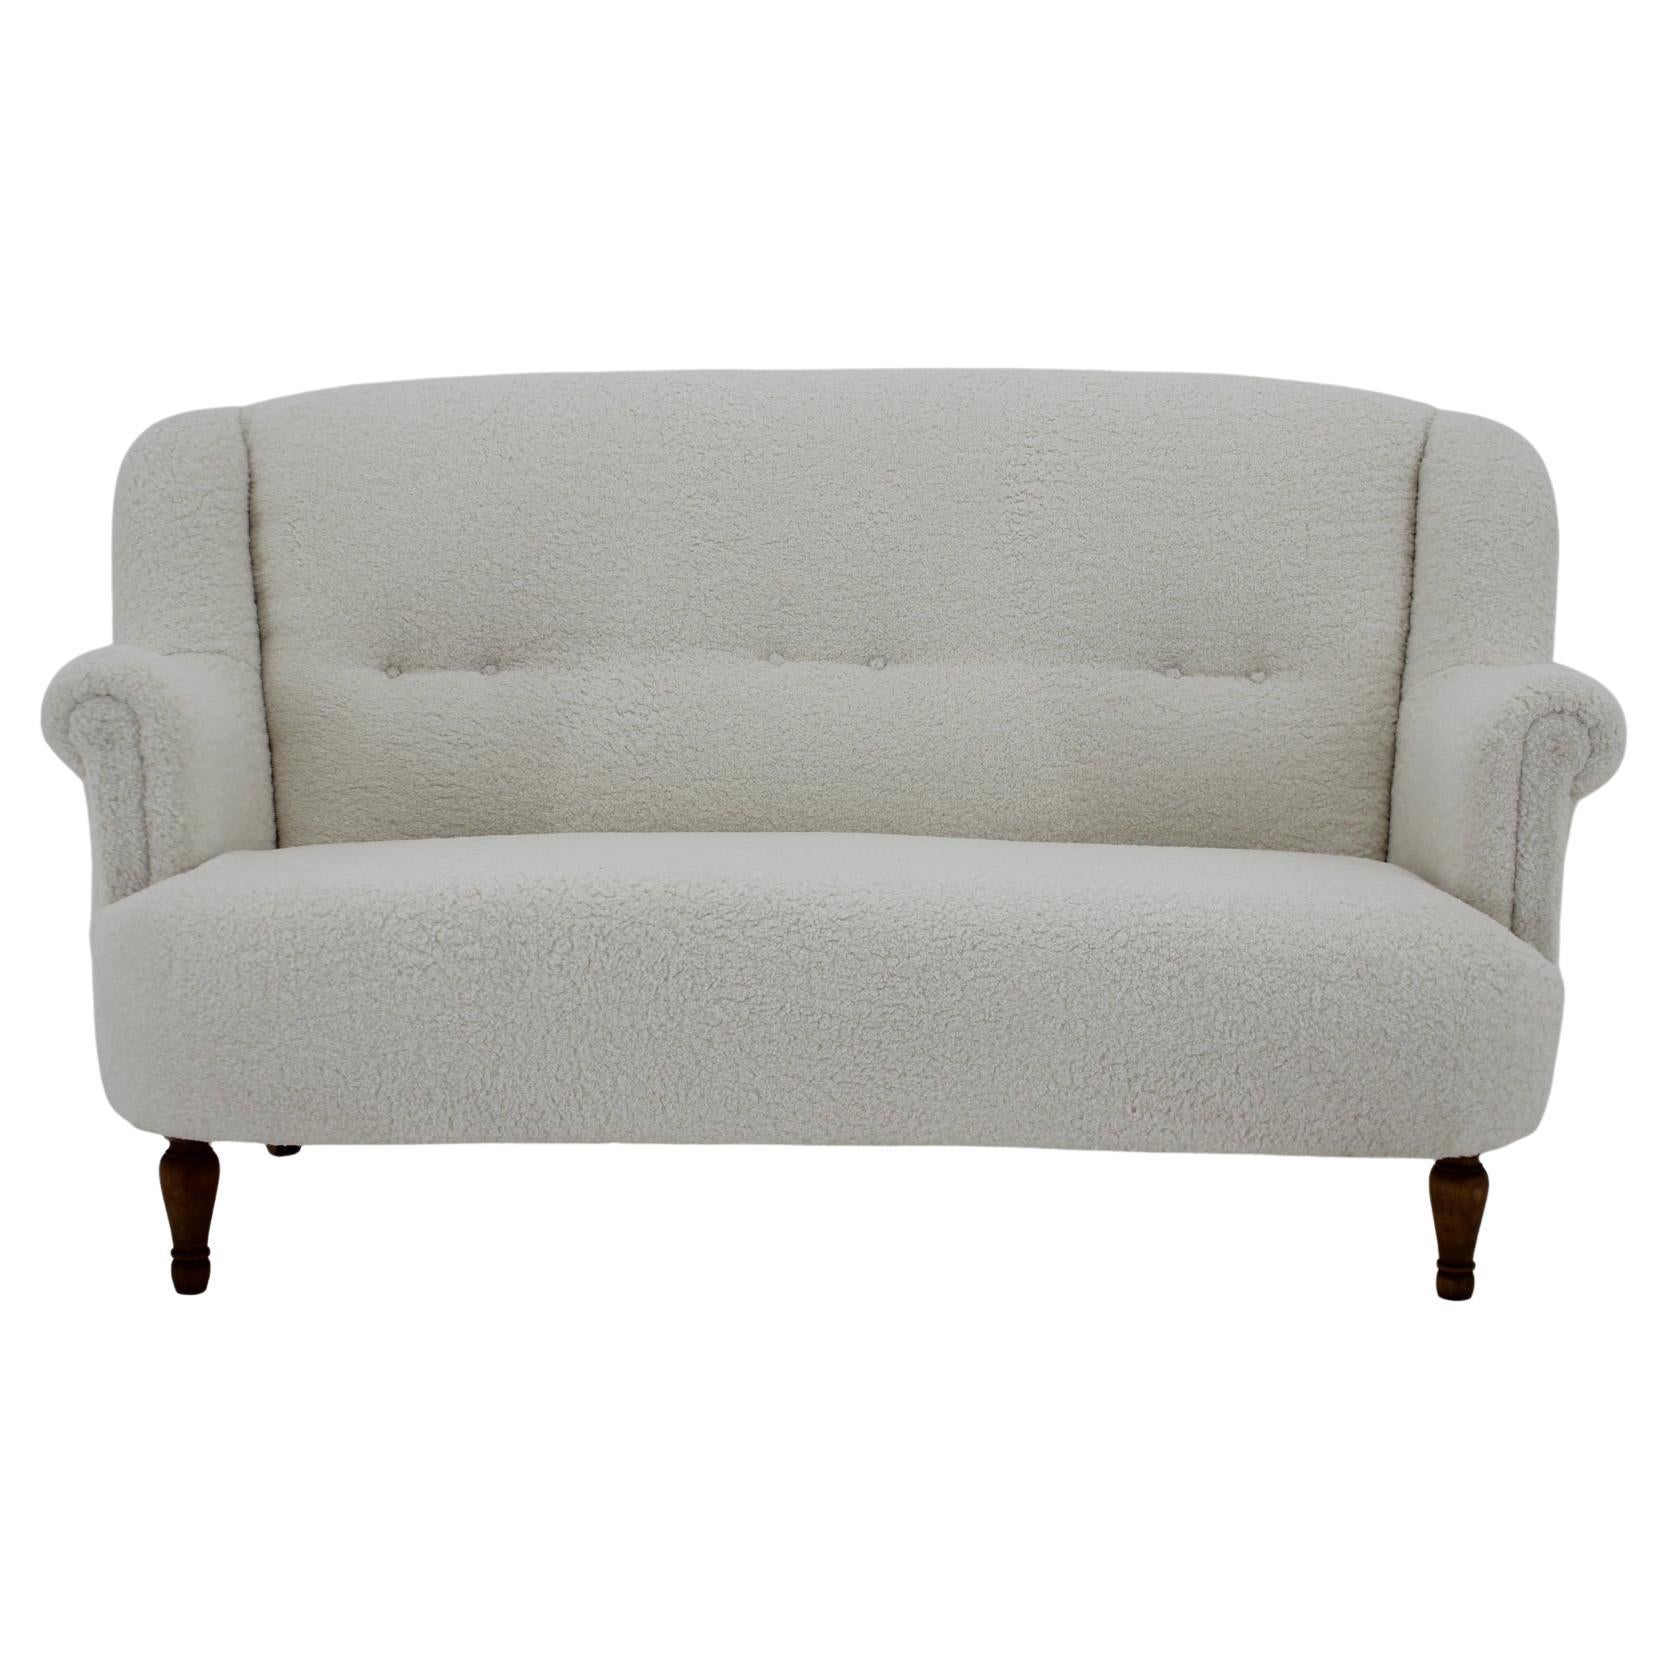 1940s 2-Seater Sofa in Sheepskin Fabric, Czechoslovakia For Sale